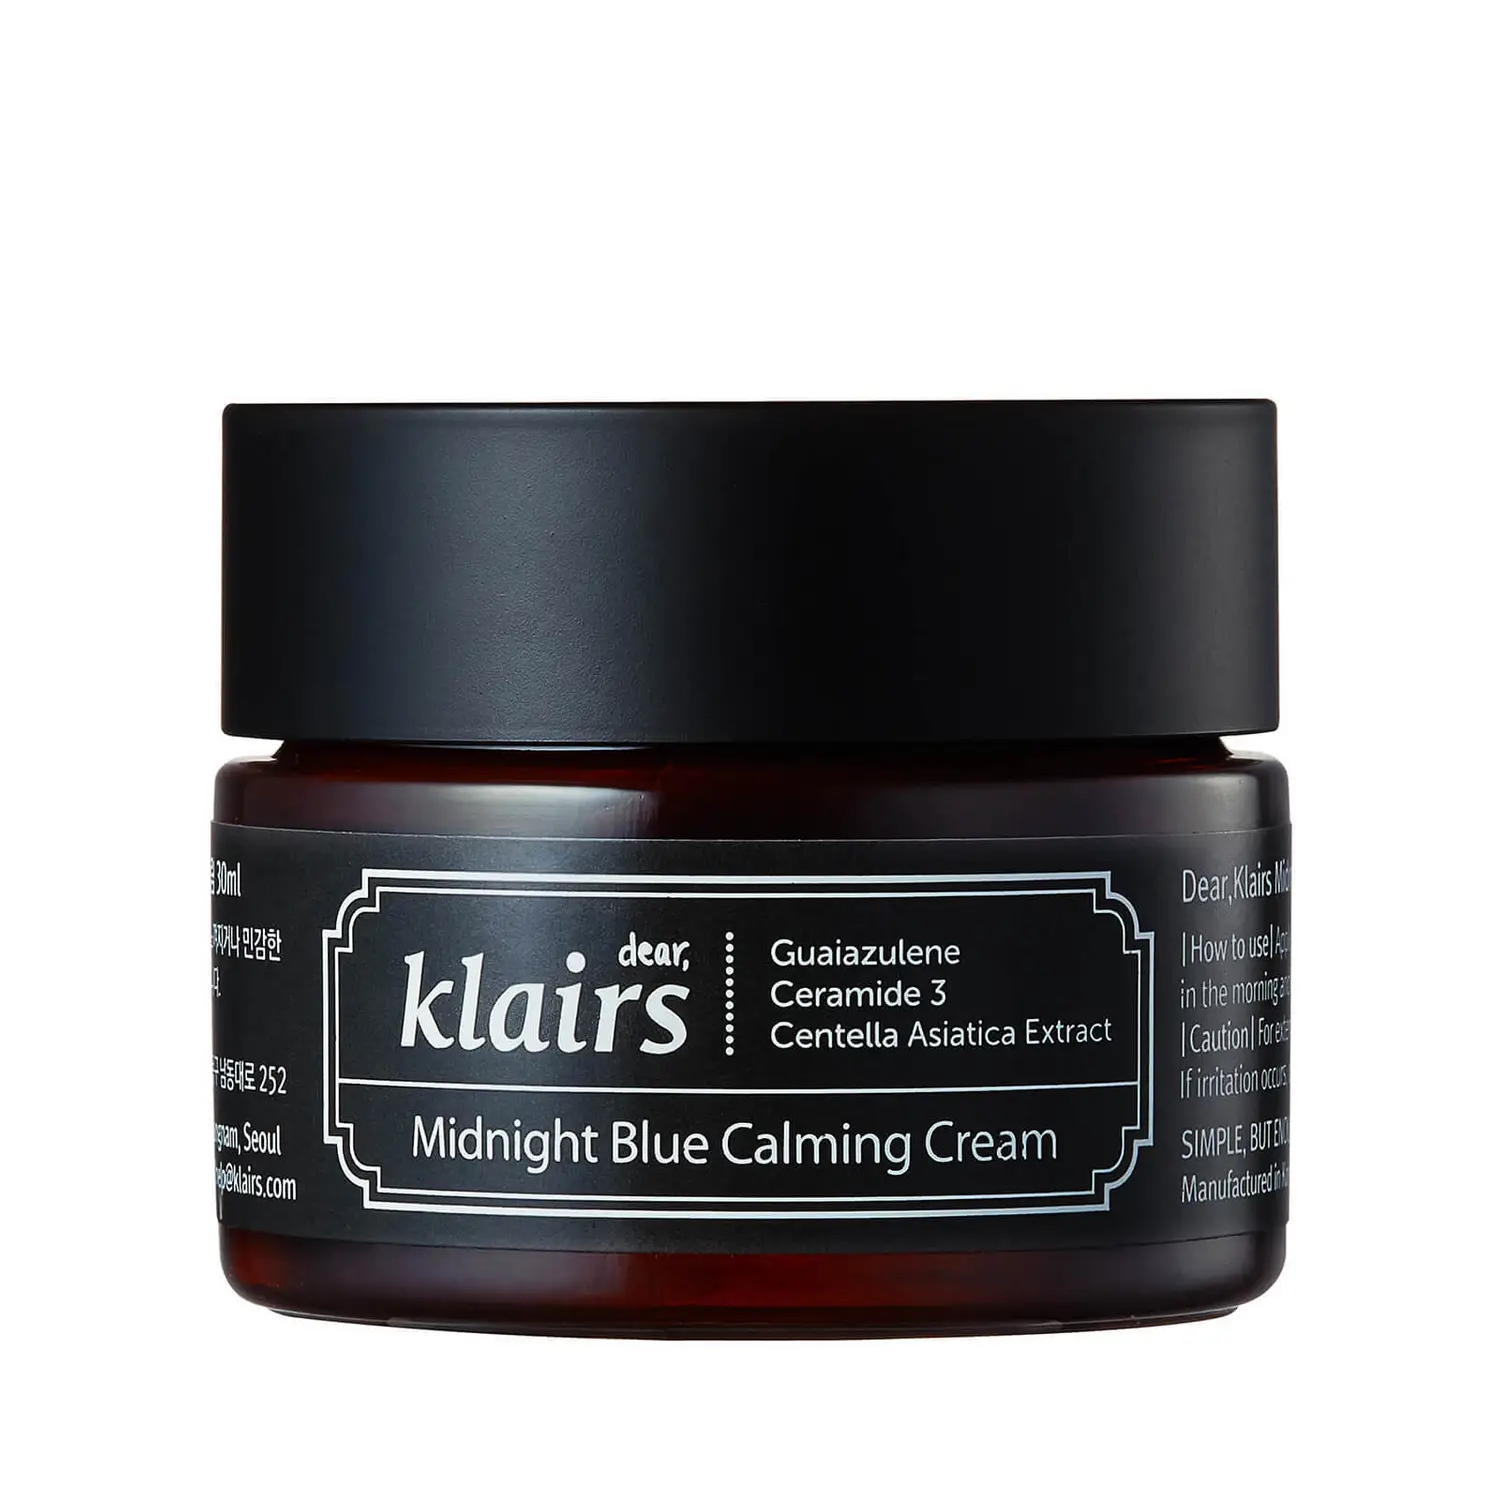 Midnight Blue Calming Cream